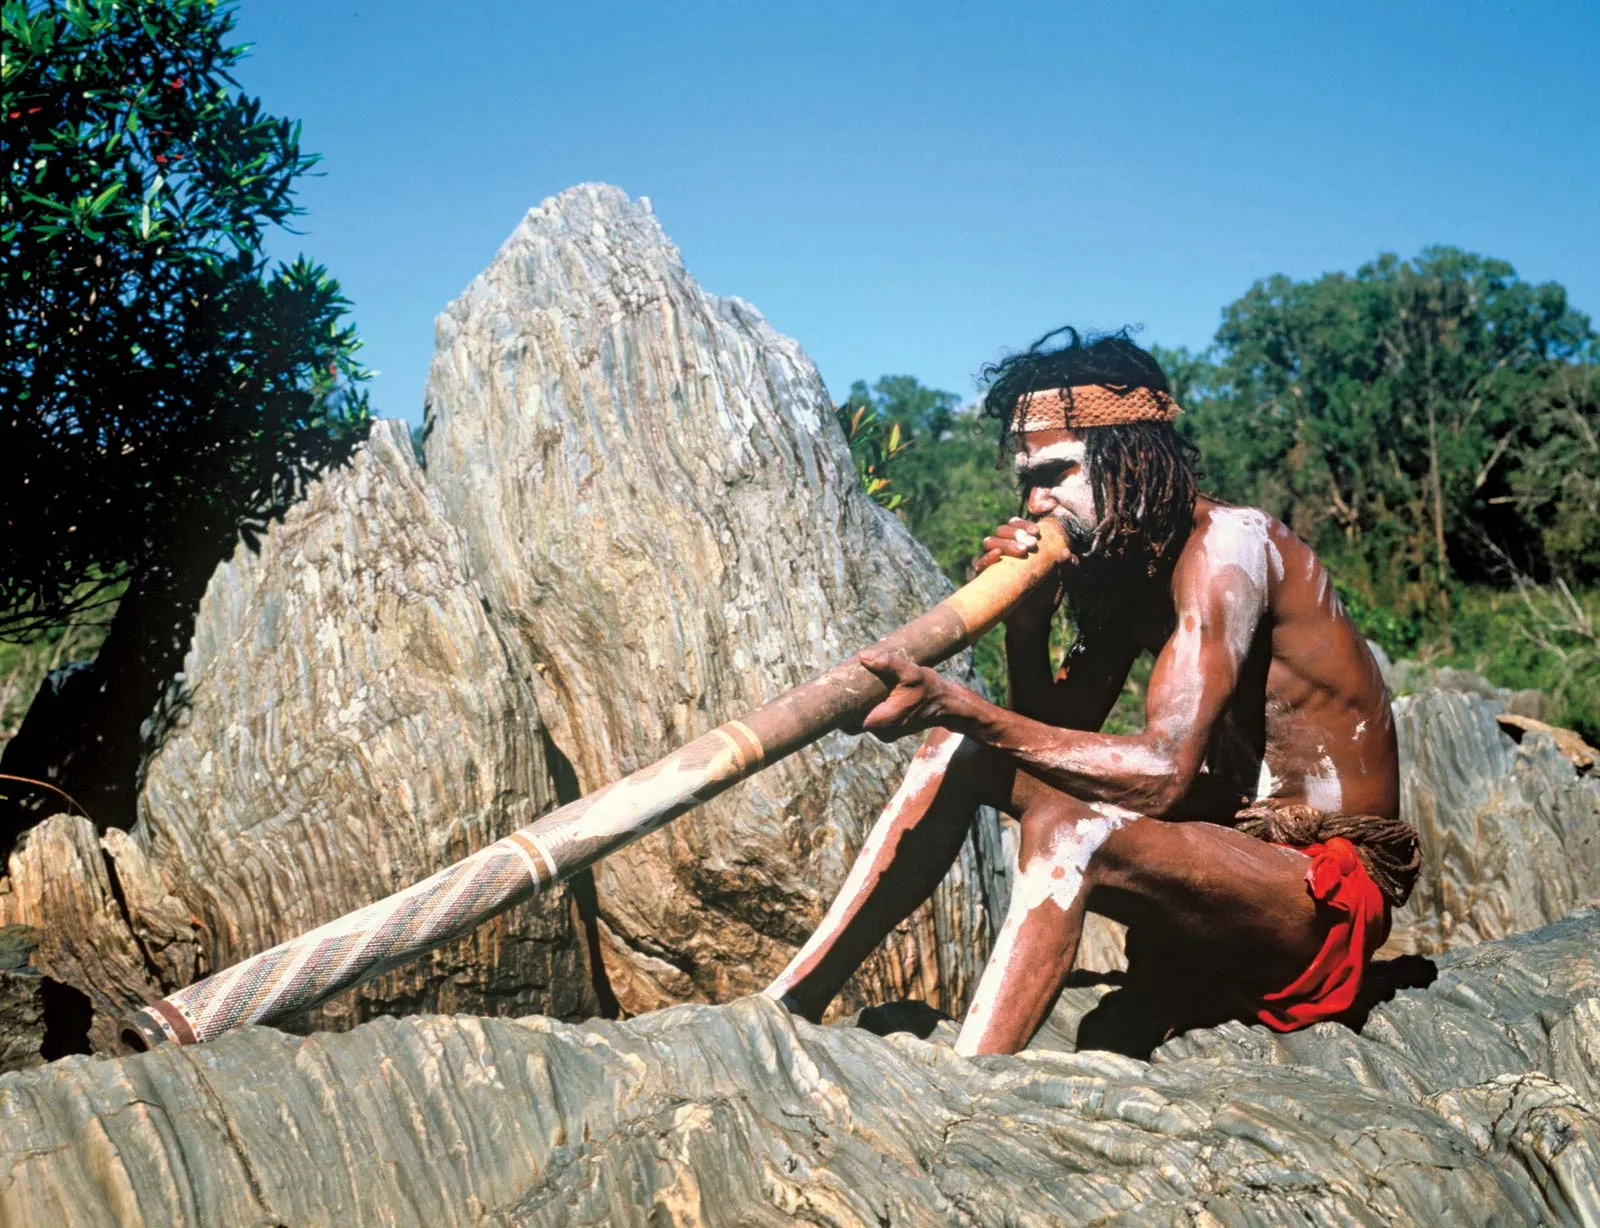 Indigenous Australian Culture